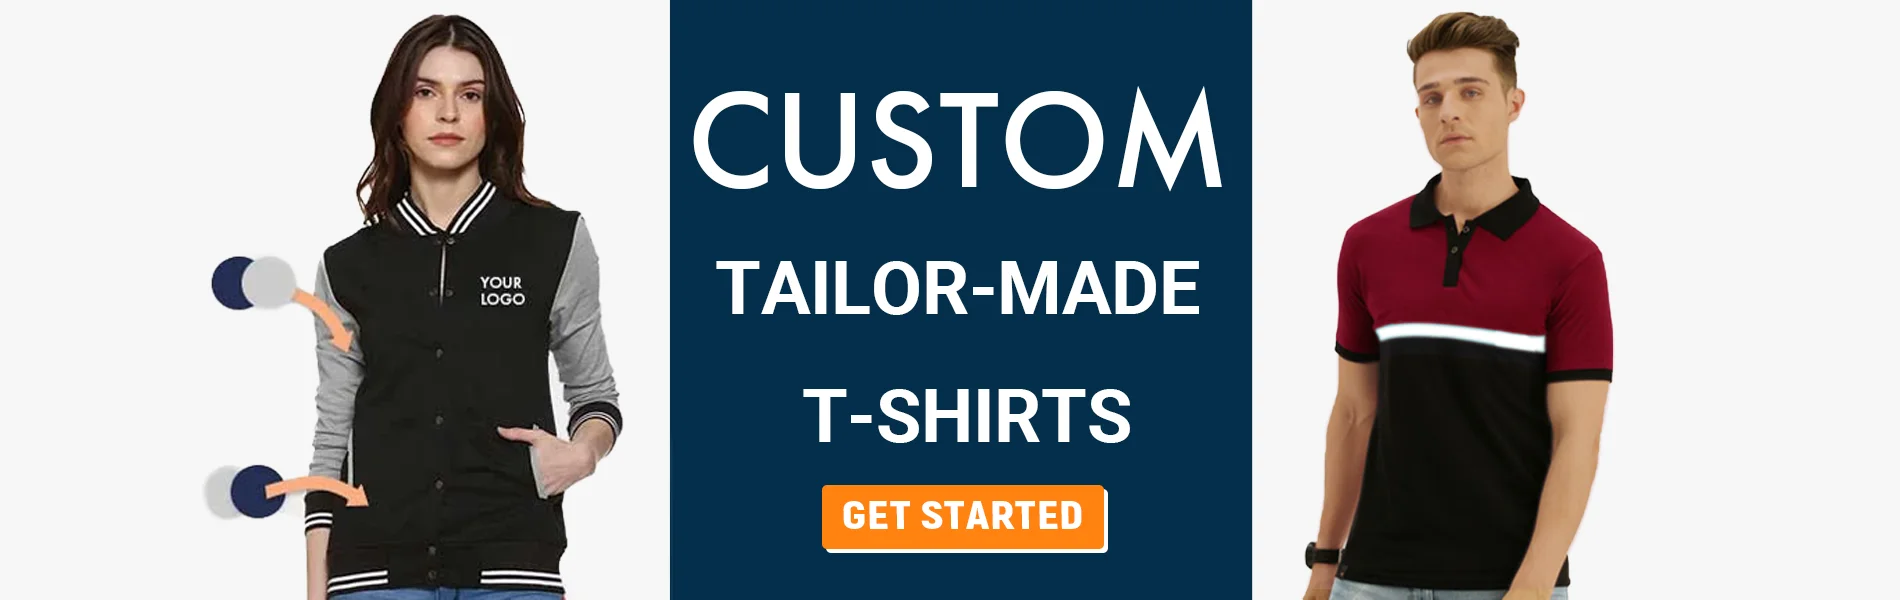 custom tailormade t-shirts bangalore